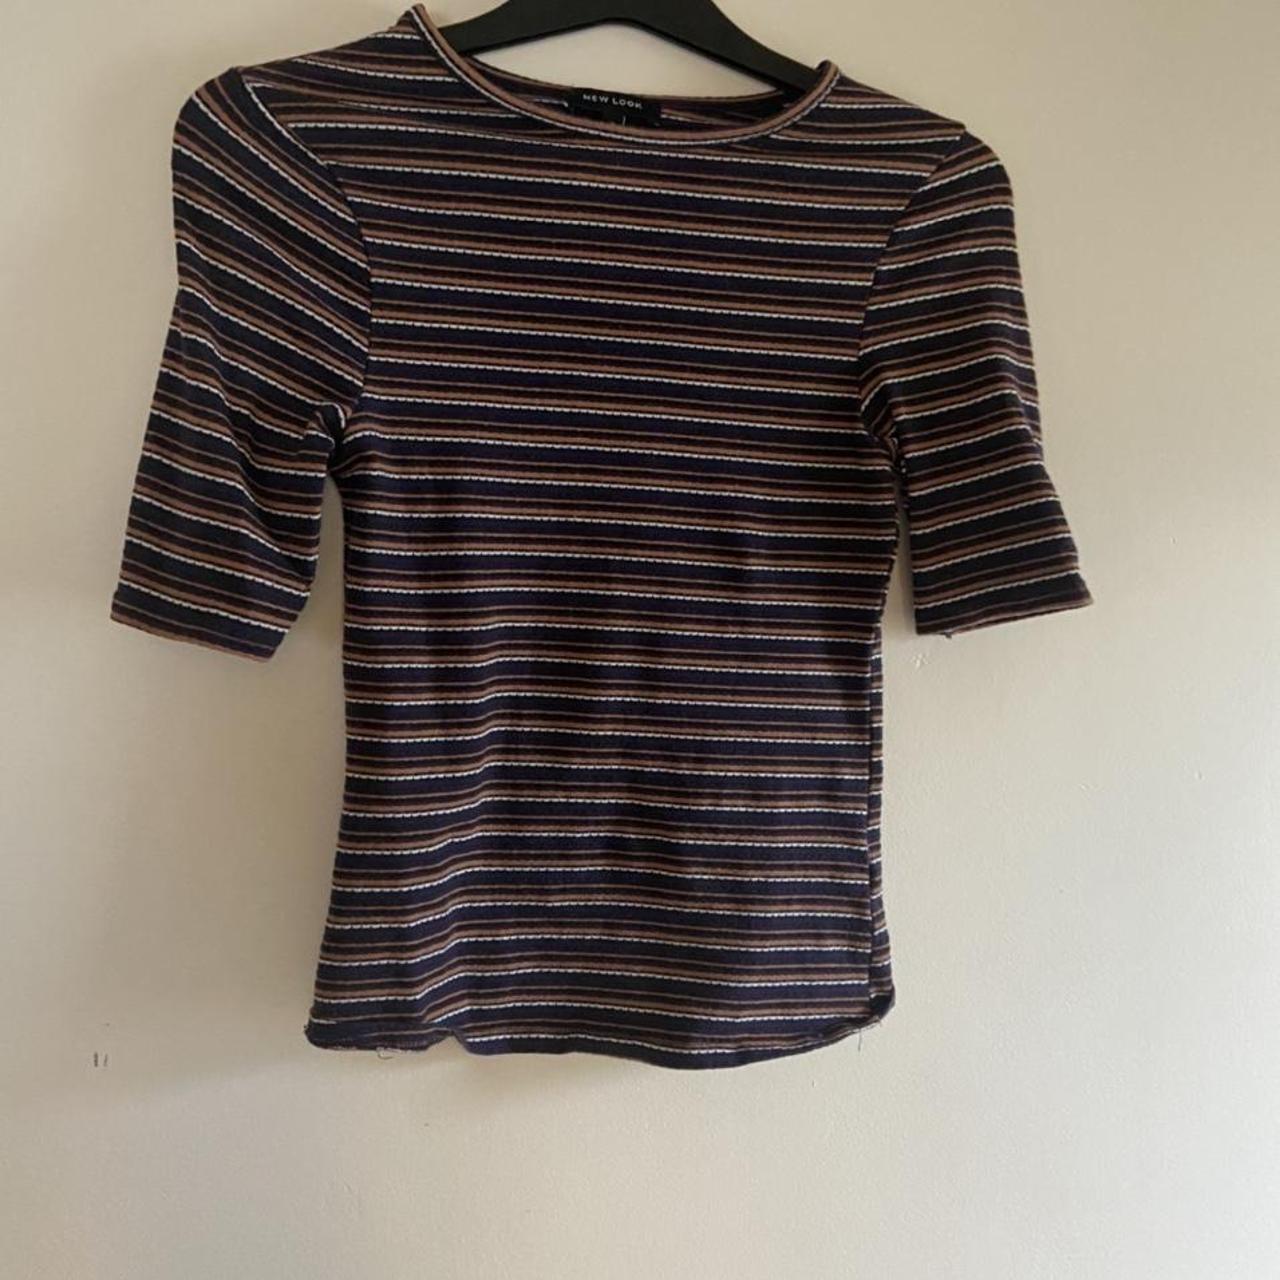 Orange and Black striped t shirt#N#-size xs#N#-used to... - Depop